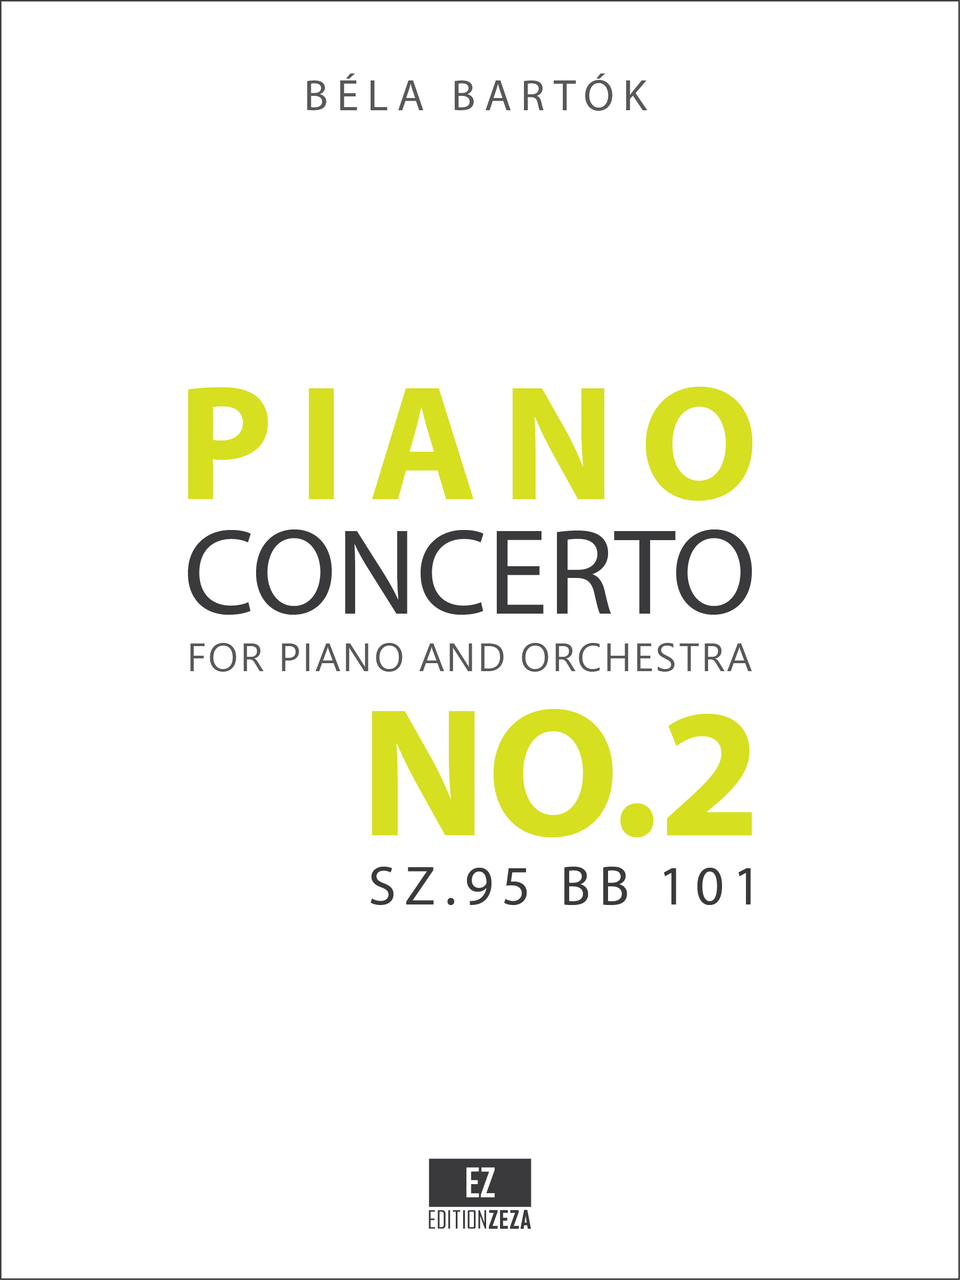 Bartok: Piano Concerto No.2 Sz.95 - Sheet Music X - Scores and Parts